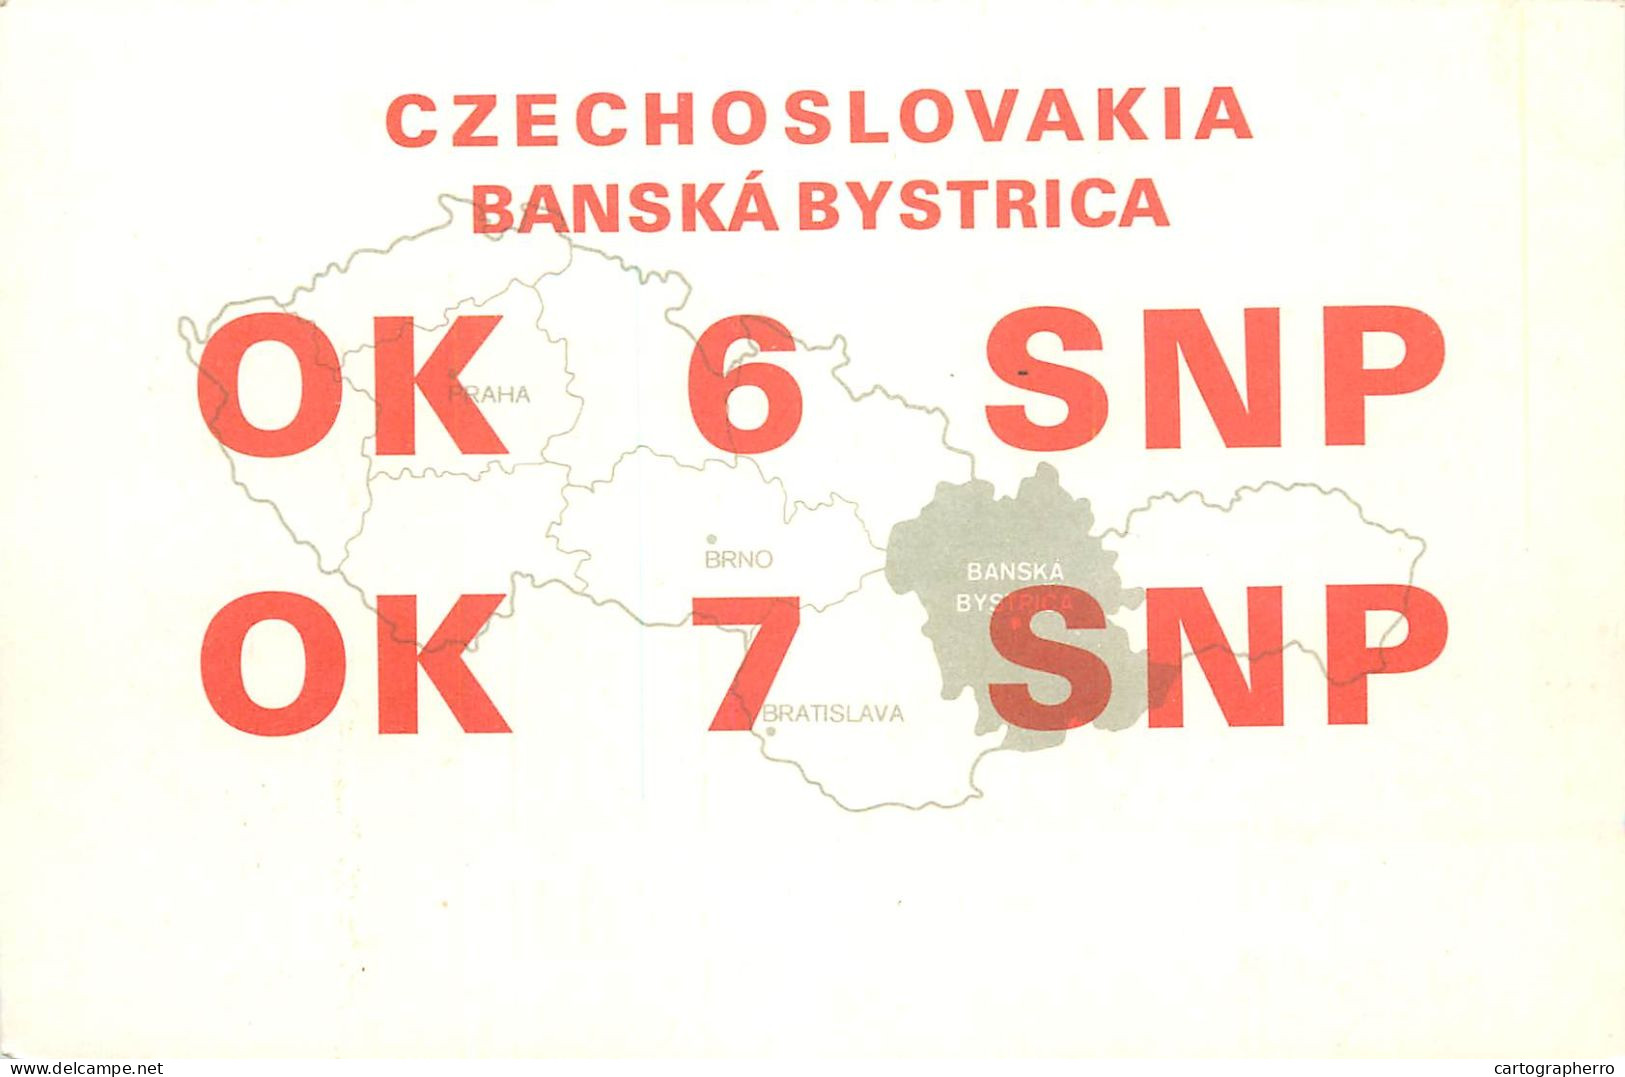 Radio Amateur QSL Post Card Y03CD OK6SNP Czechoslovakia - Radio-amateur